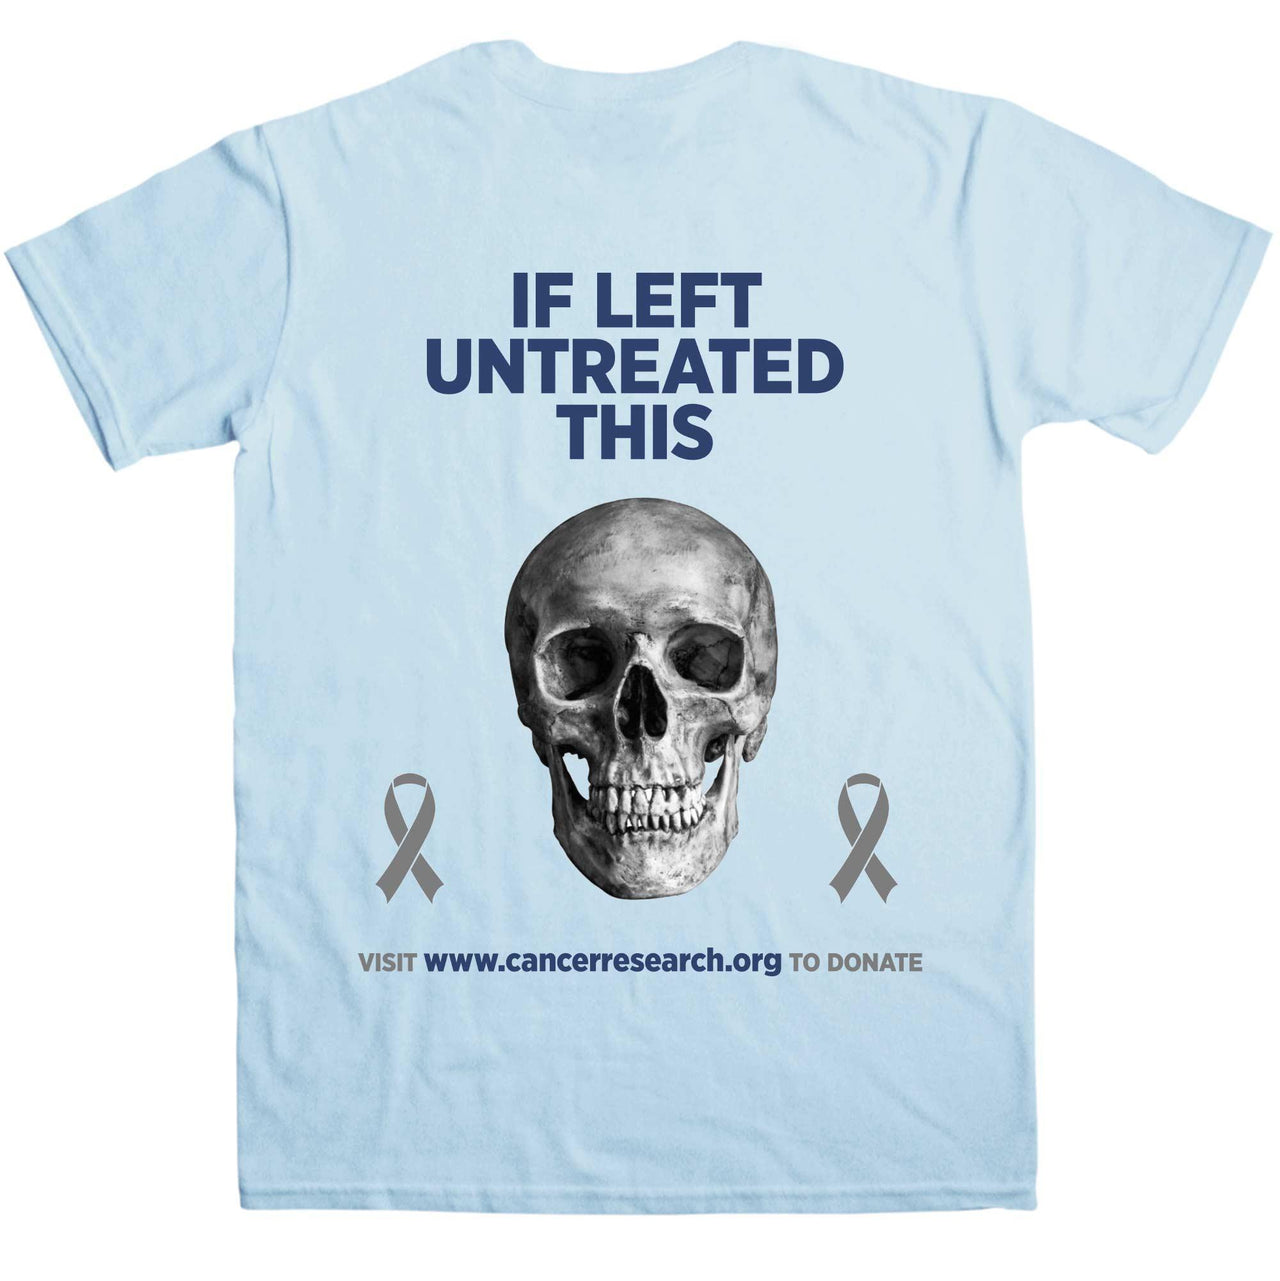 The Tumour Shirt T-Shirt For Men 8Ball